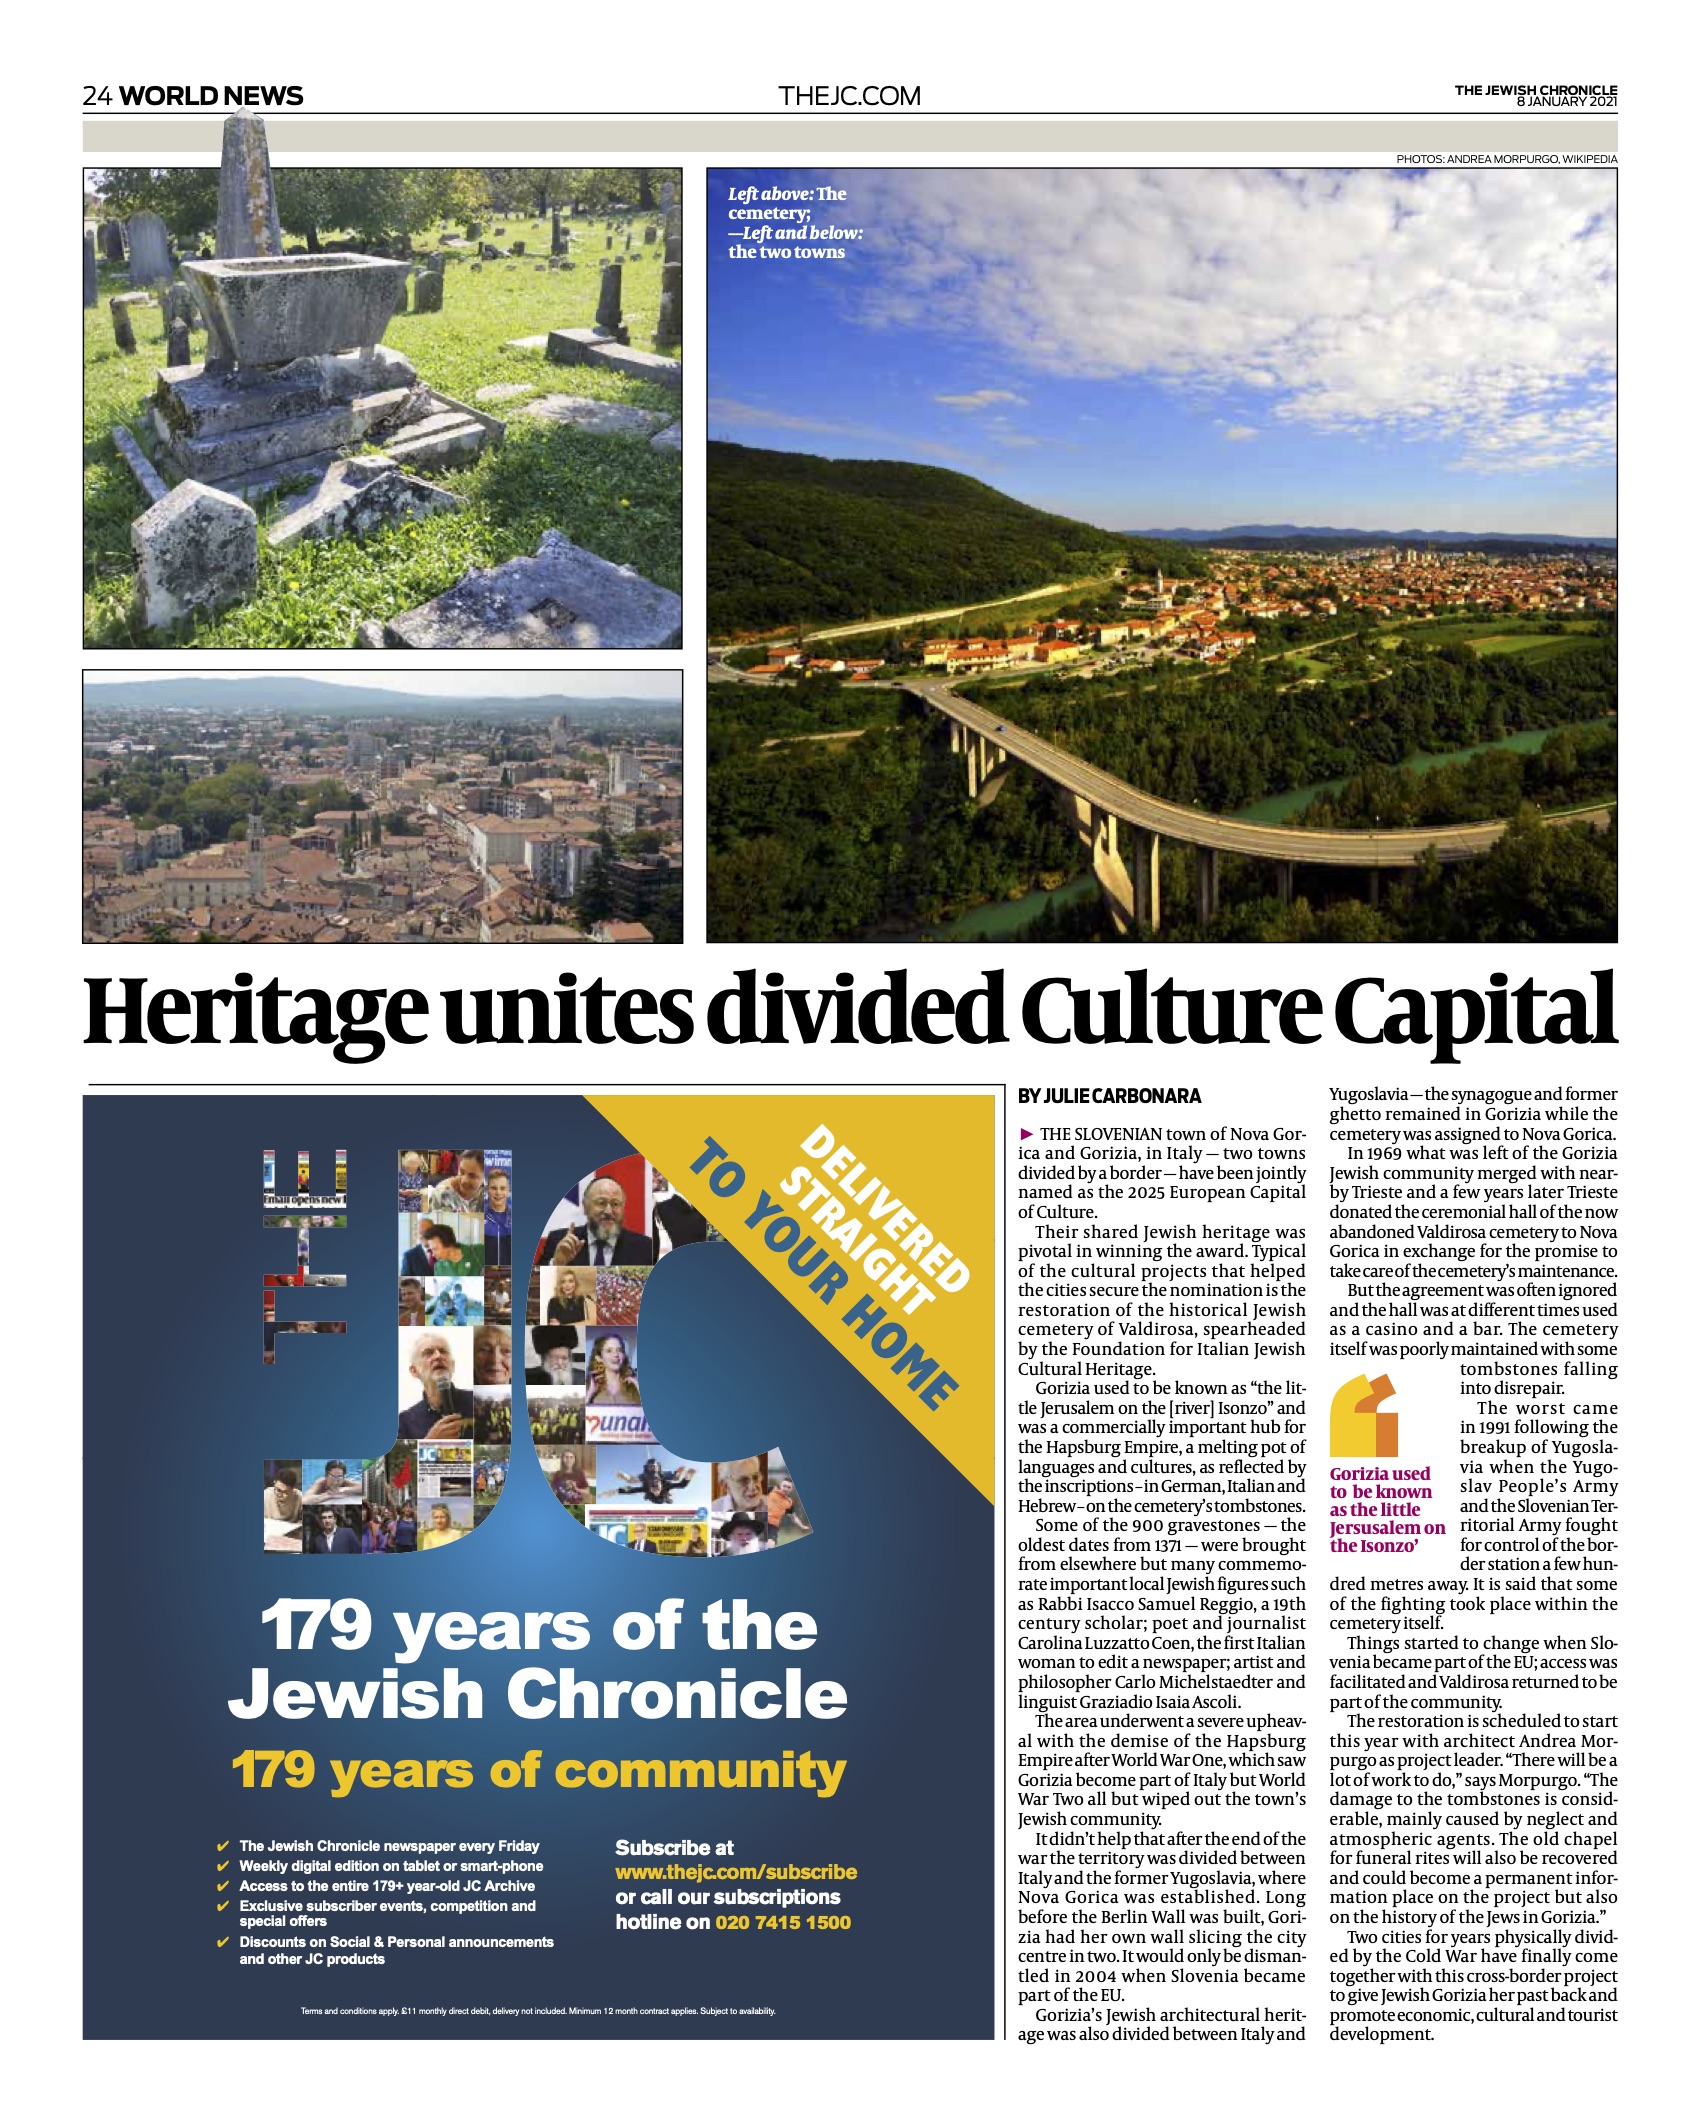 Jewish Heritage Europe 30 dicembre 2020